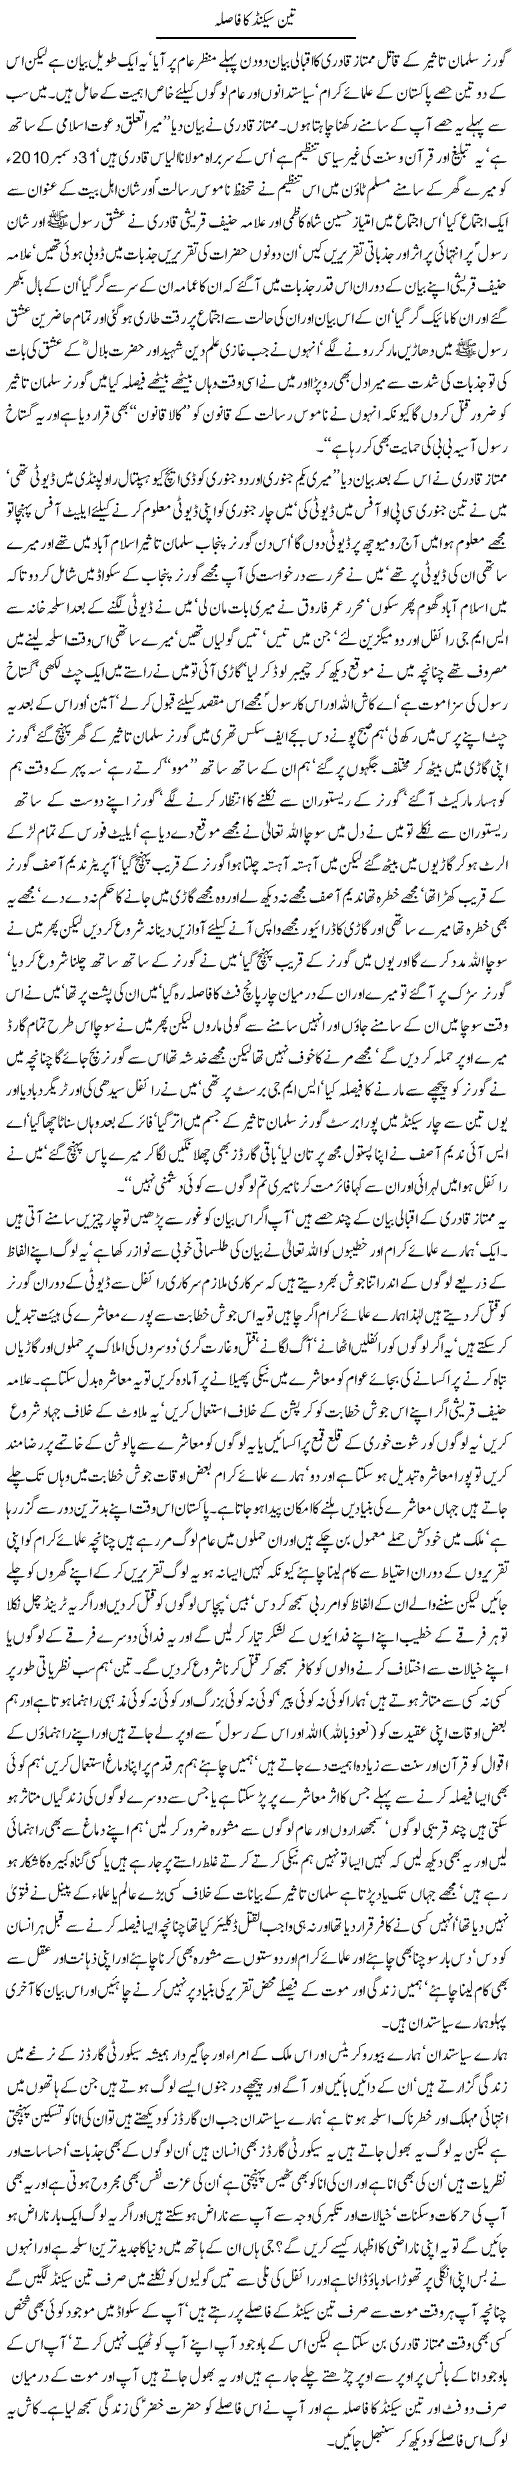 Mumtaz Qadri and Salman Taseer Express Column Javed Ch 27 January 2011